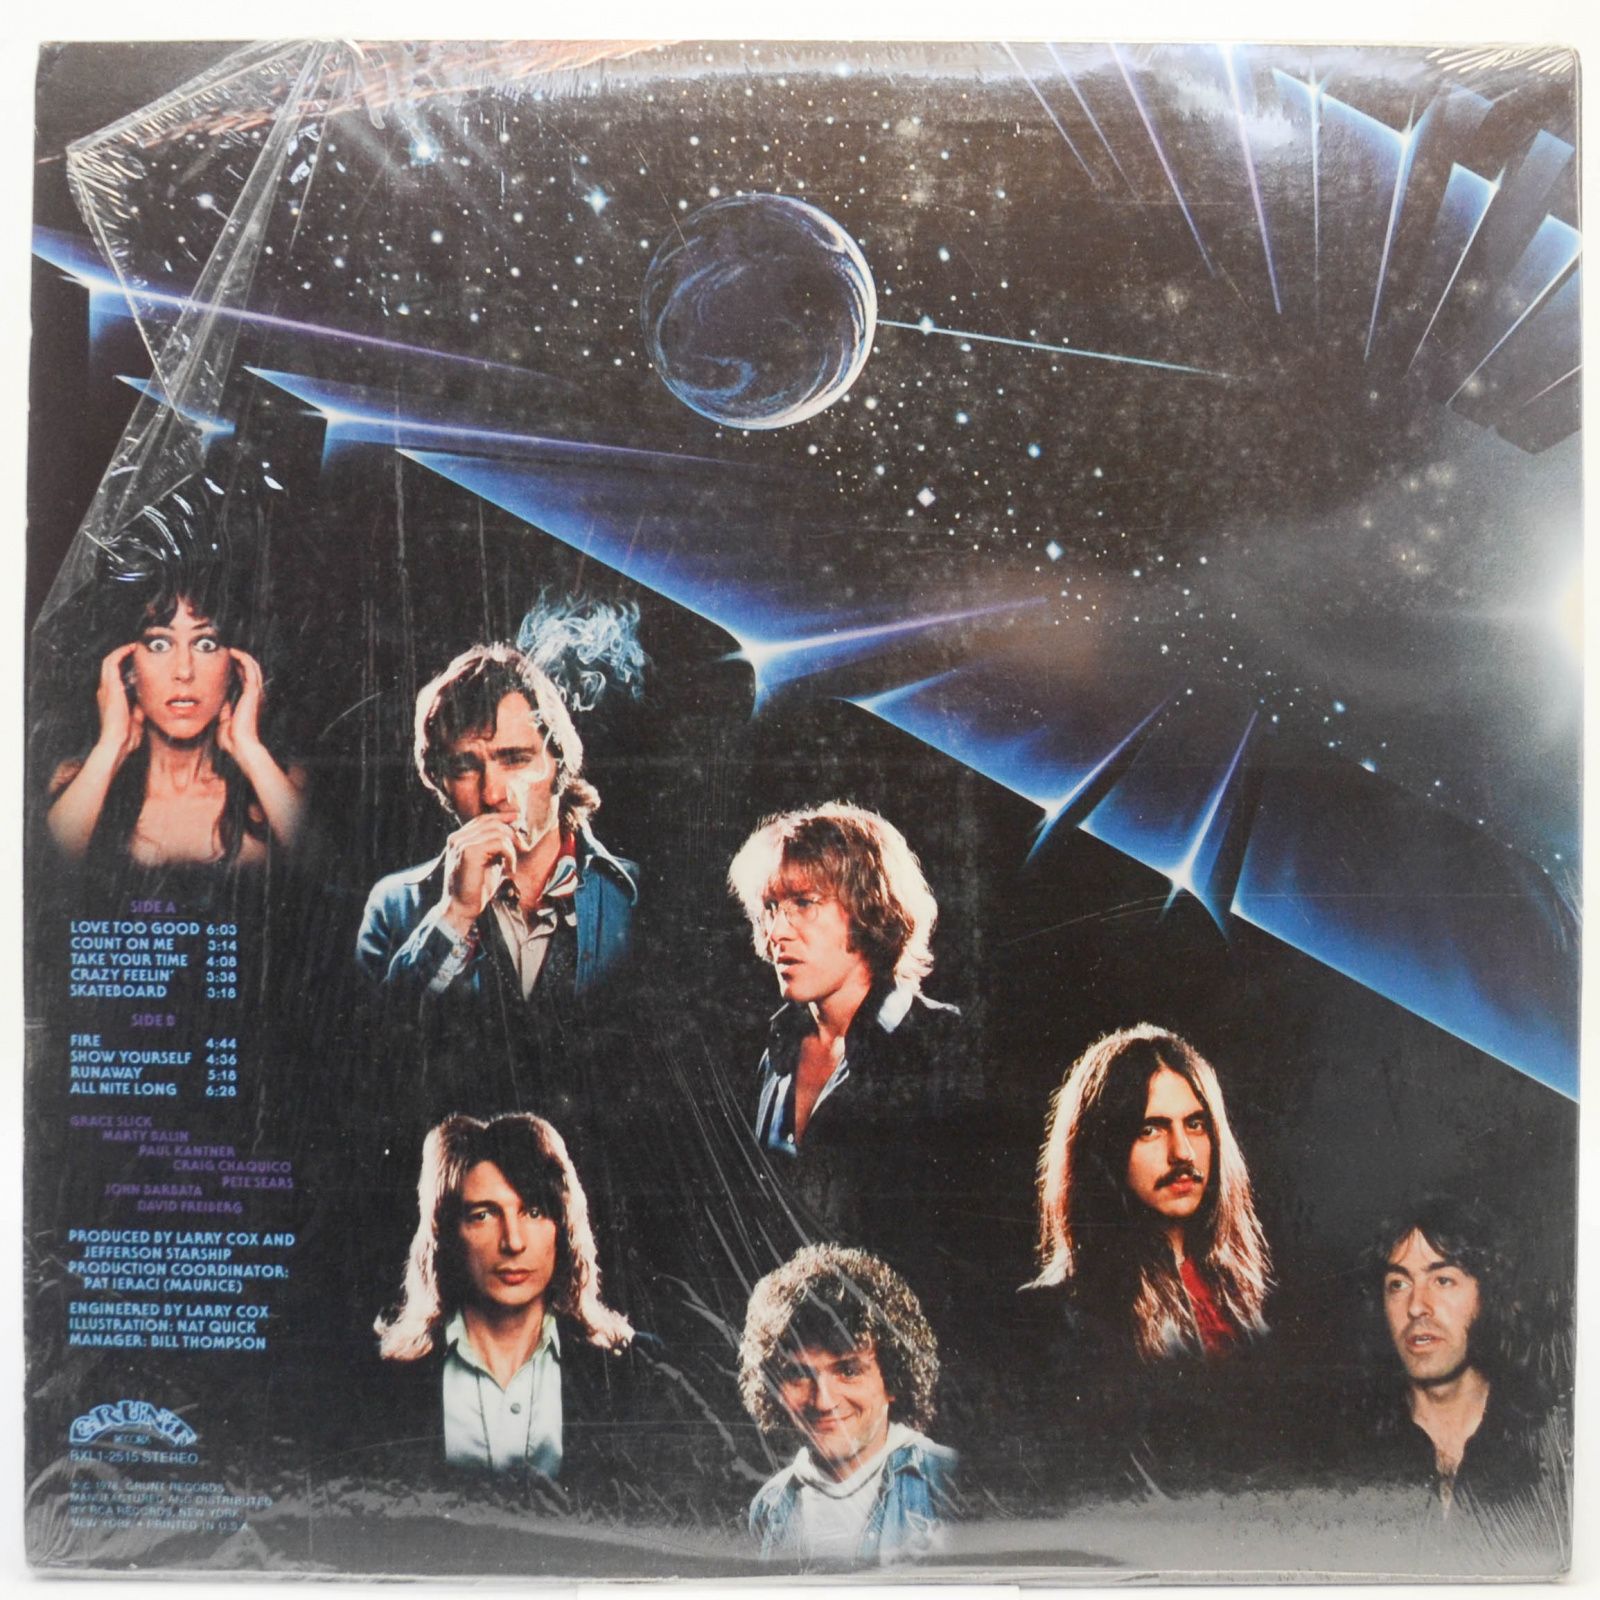 Jefferson Starship — Earth (USA), 1978